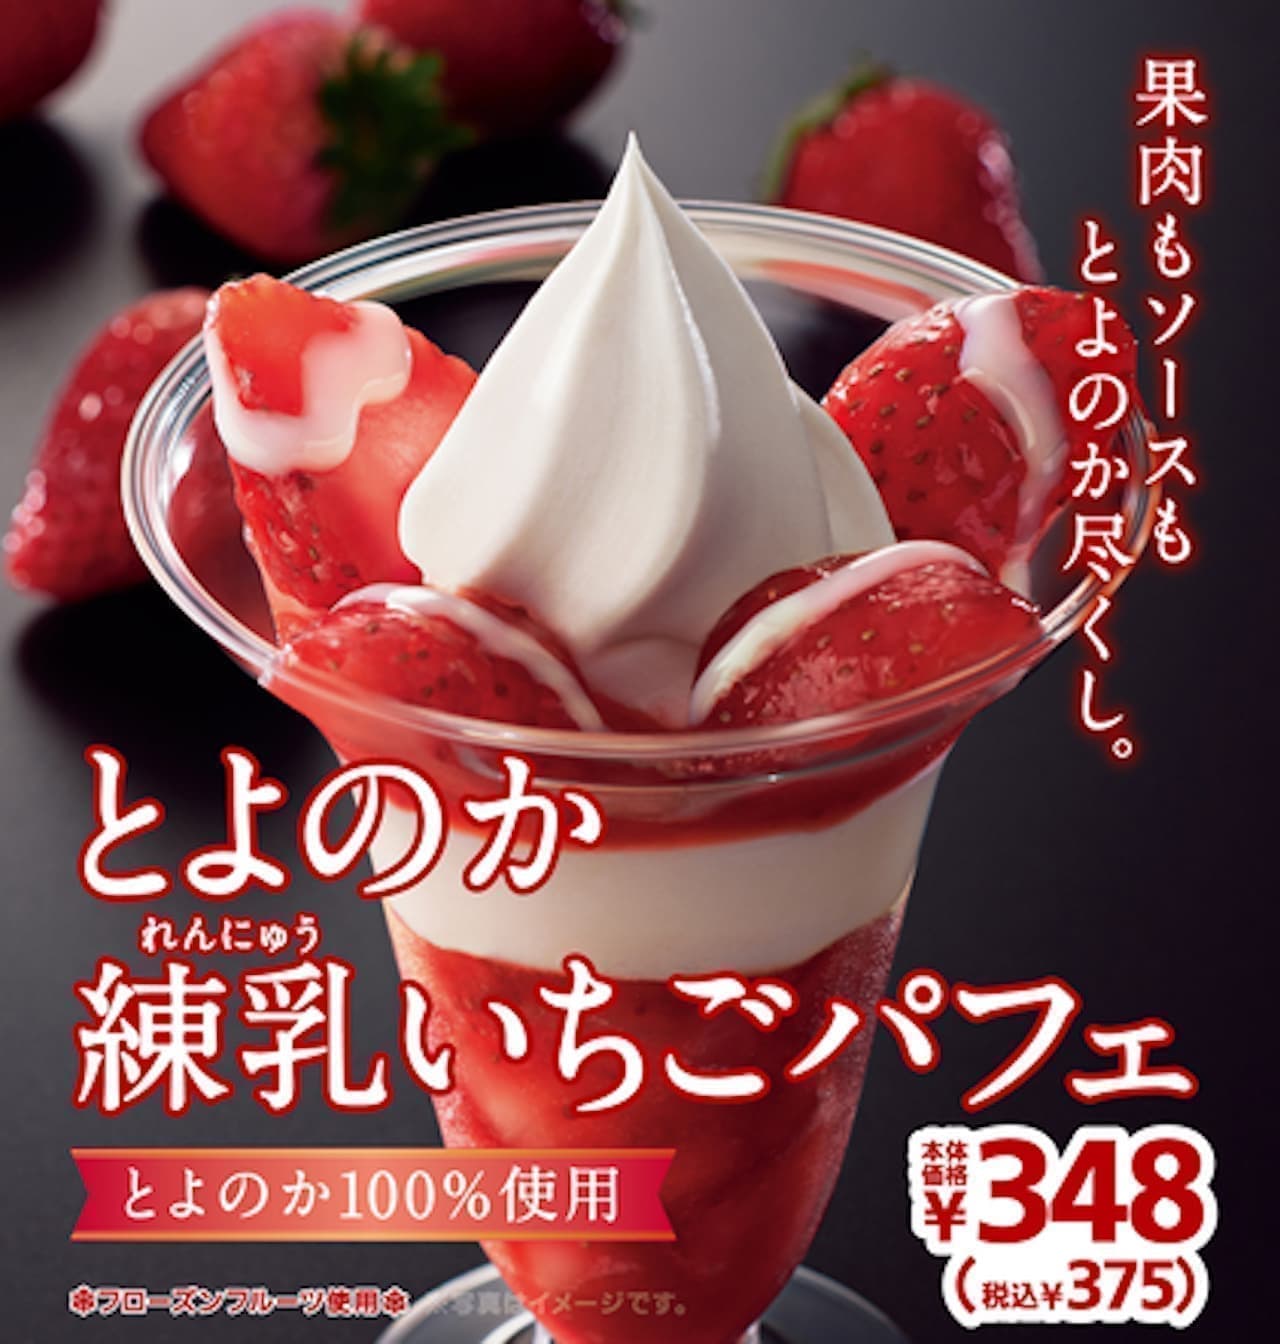 Ministop "Toyonoka Condensed Milk Strawberry Parfait"